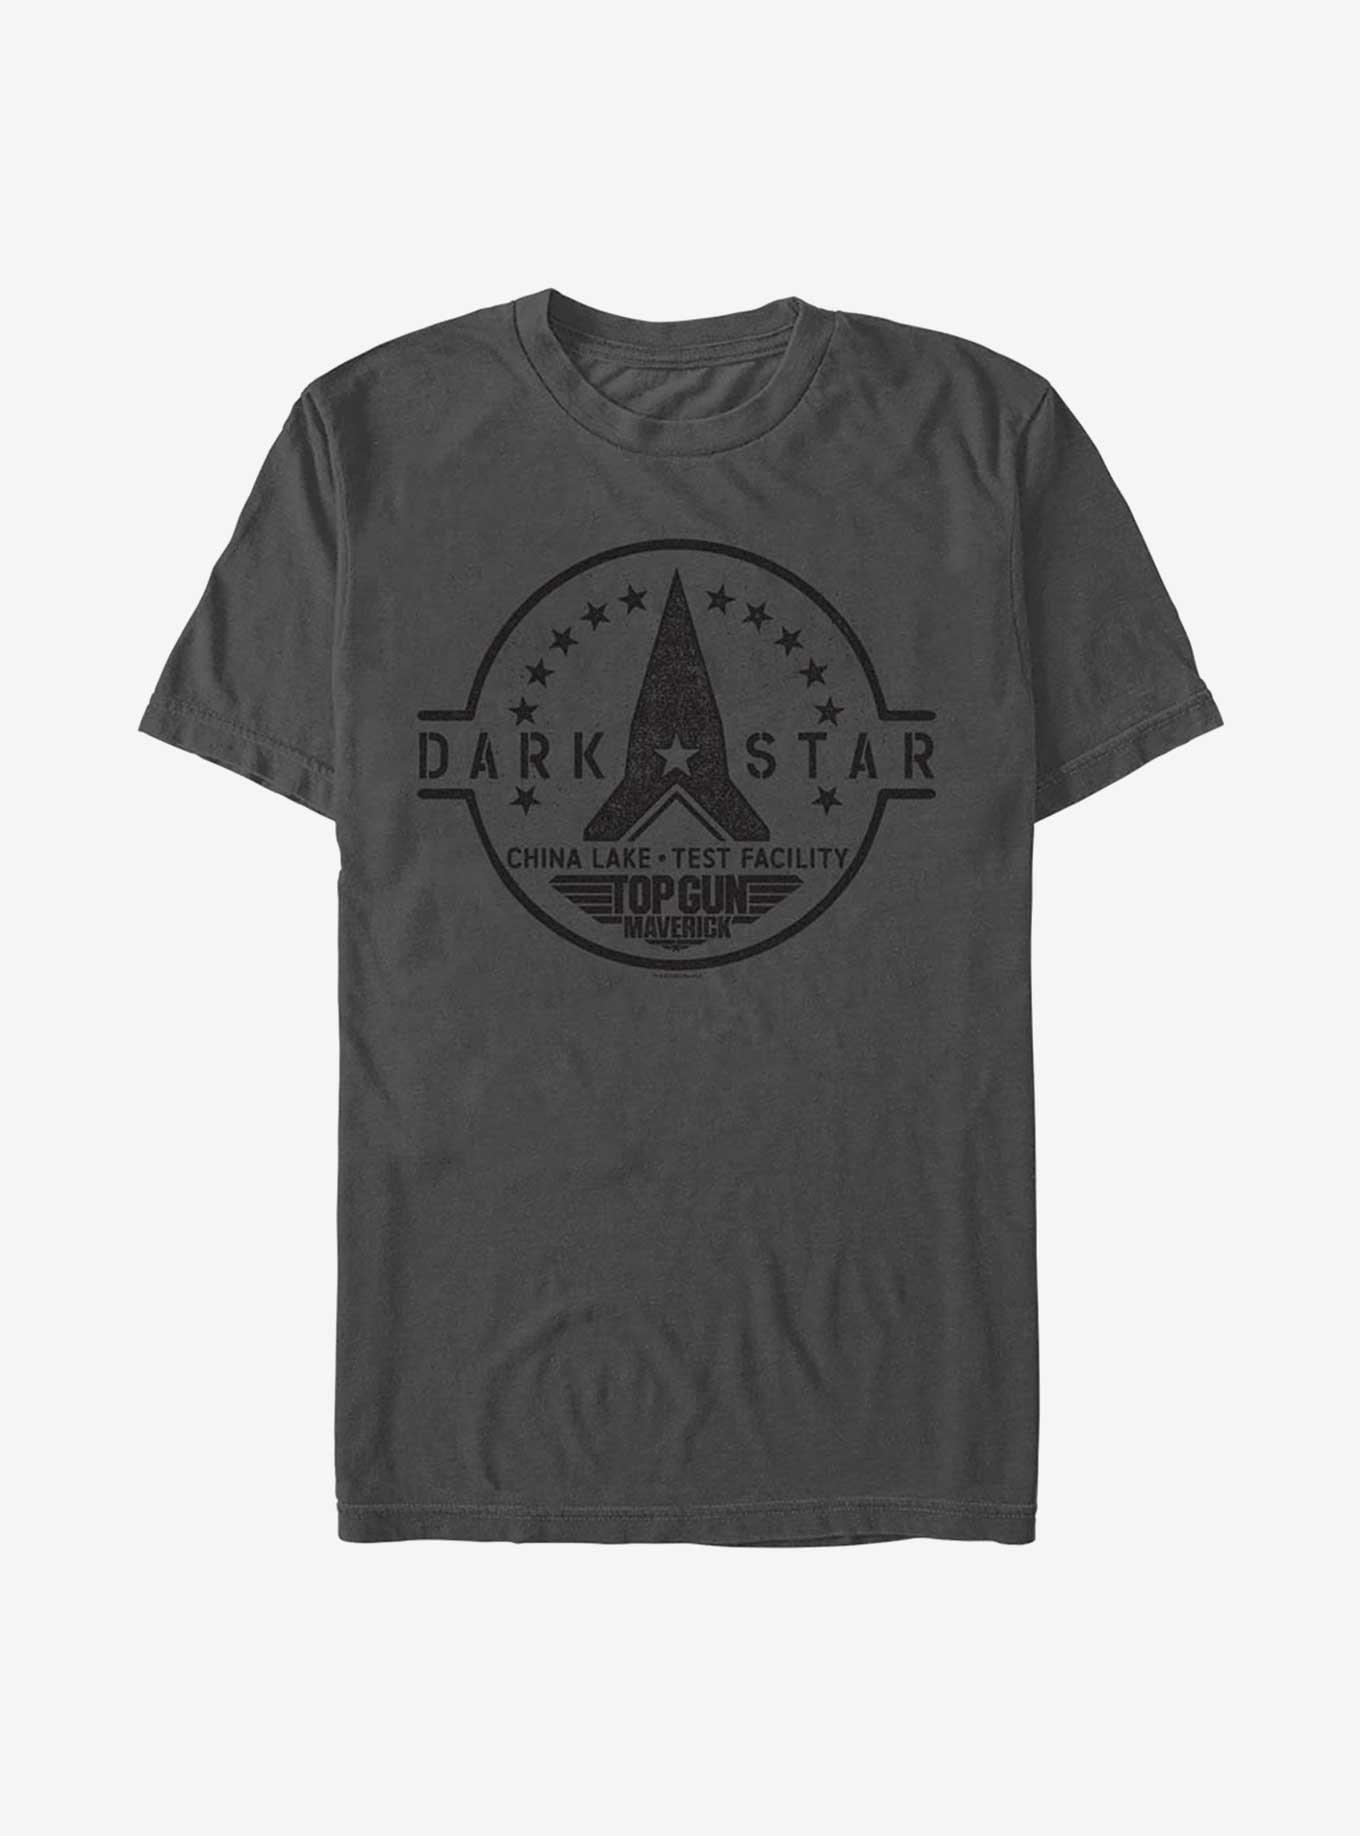 Top Gun: Maverick Dark Star T-Shirt, CHARCOAL, hi-res